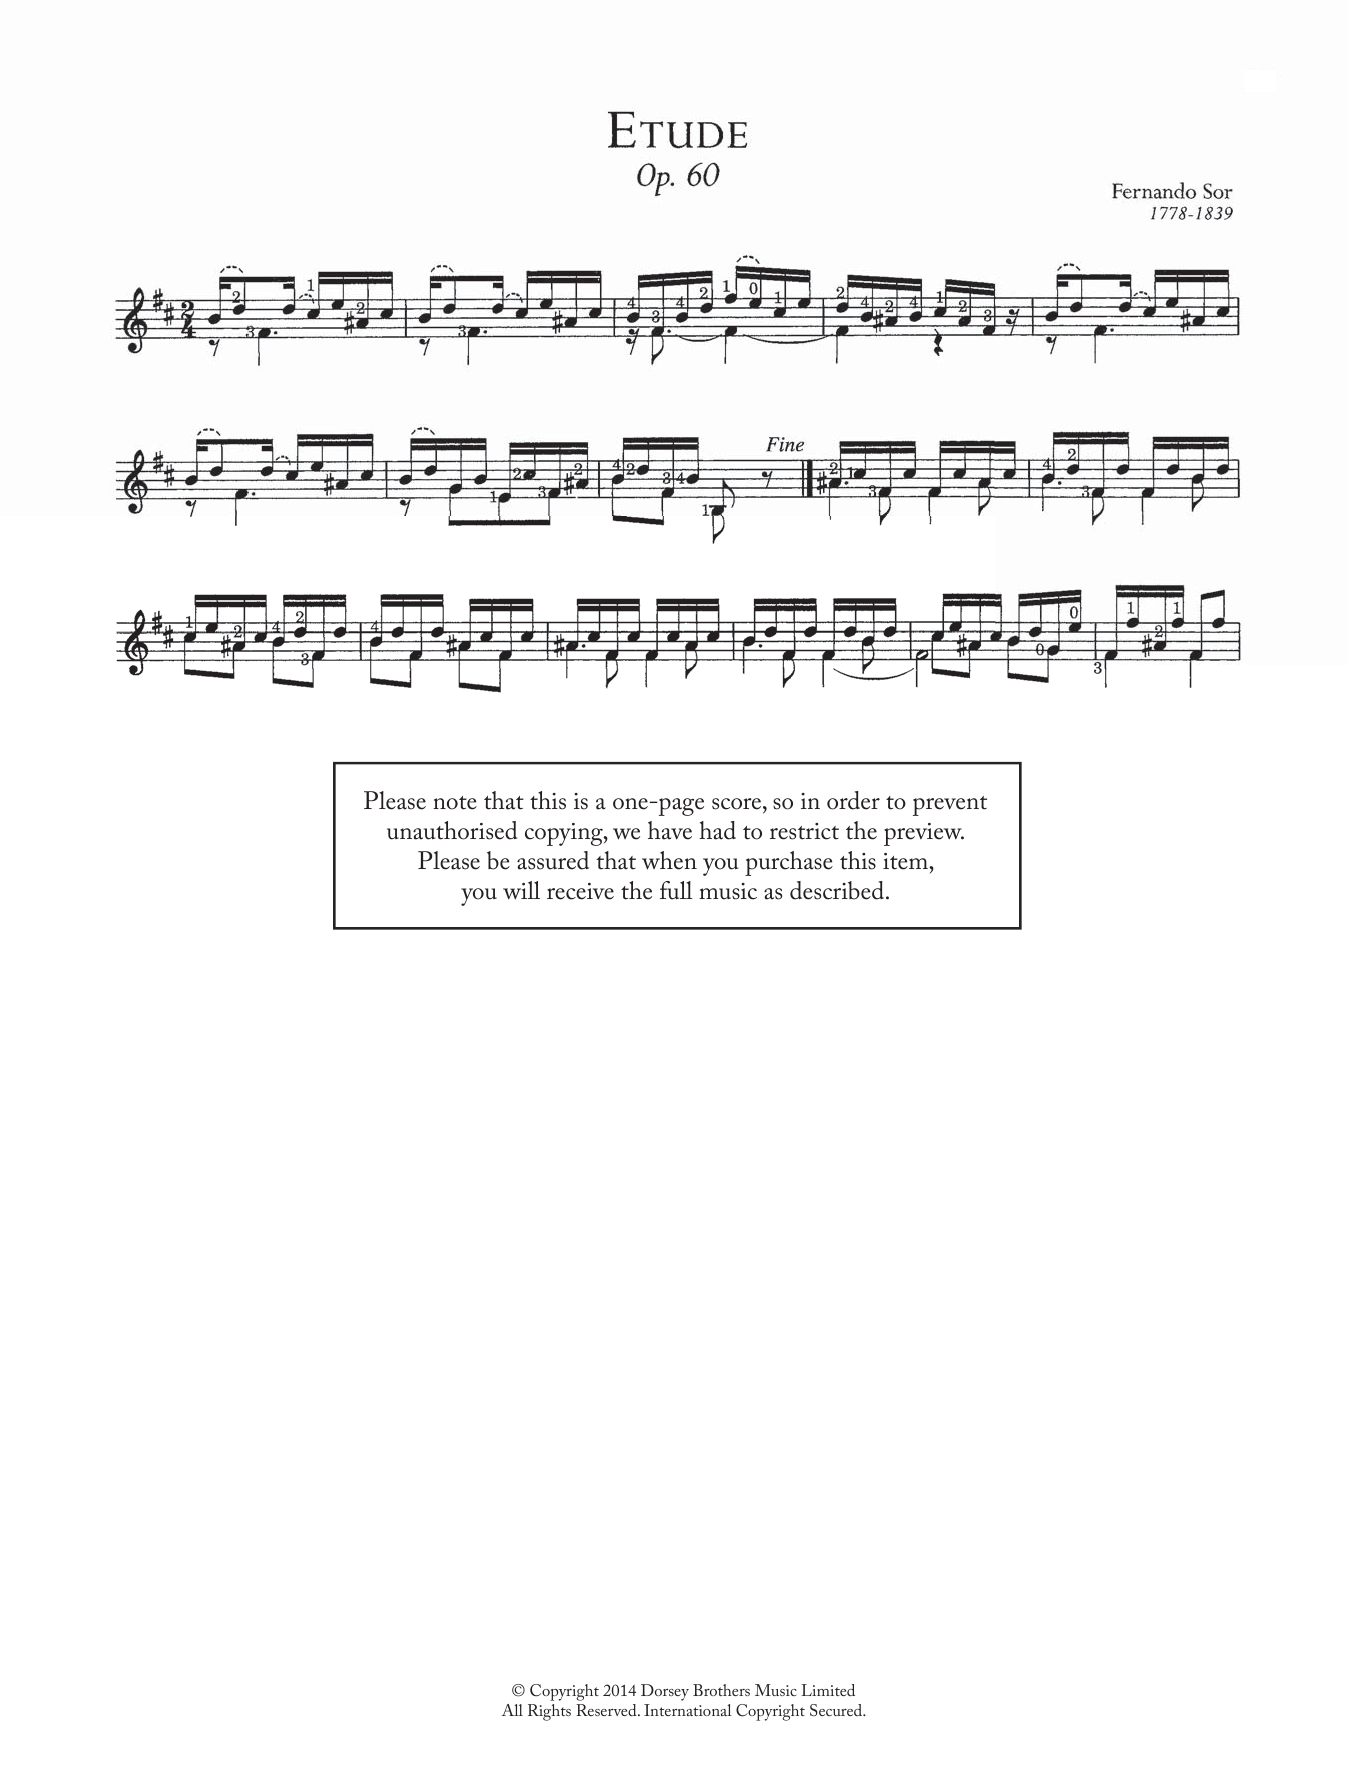 Fernando Sor Etude, Op.60 Sheet Music Notes & Chords for Guitar - Download or Print PDF